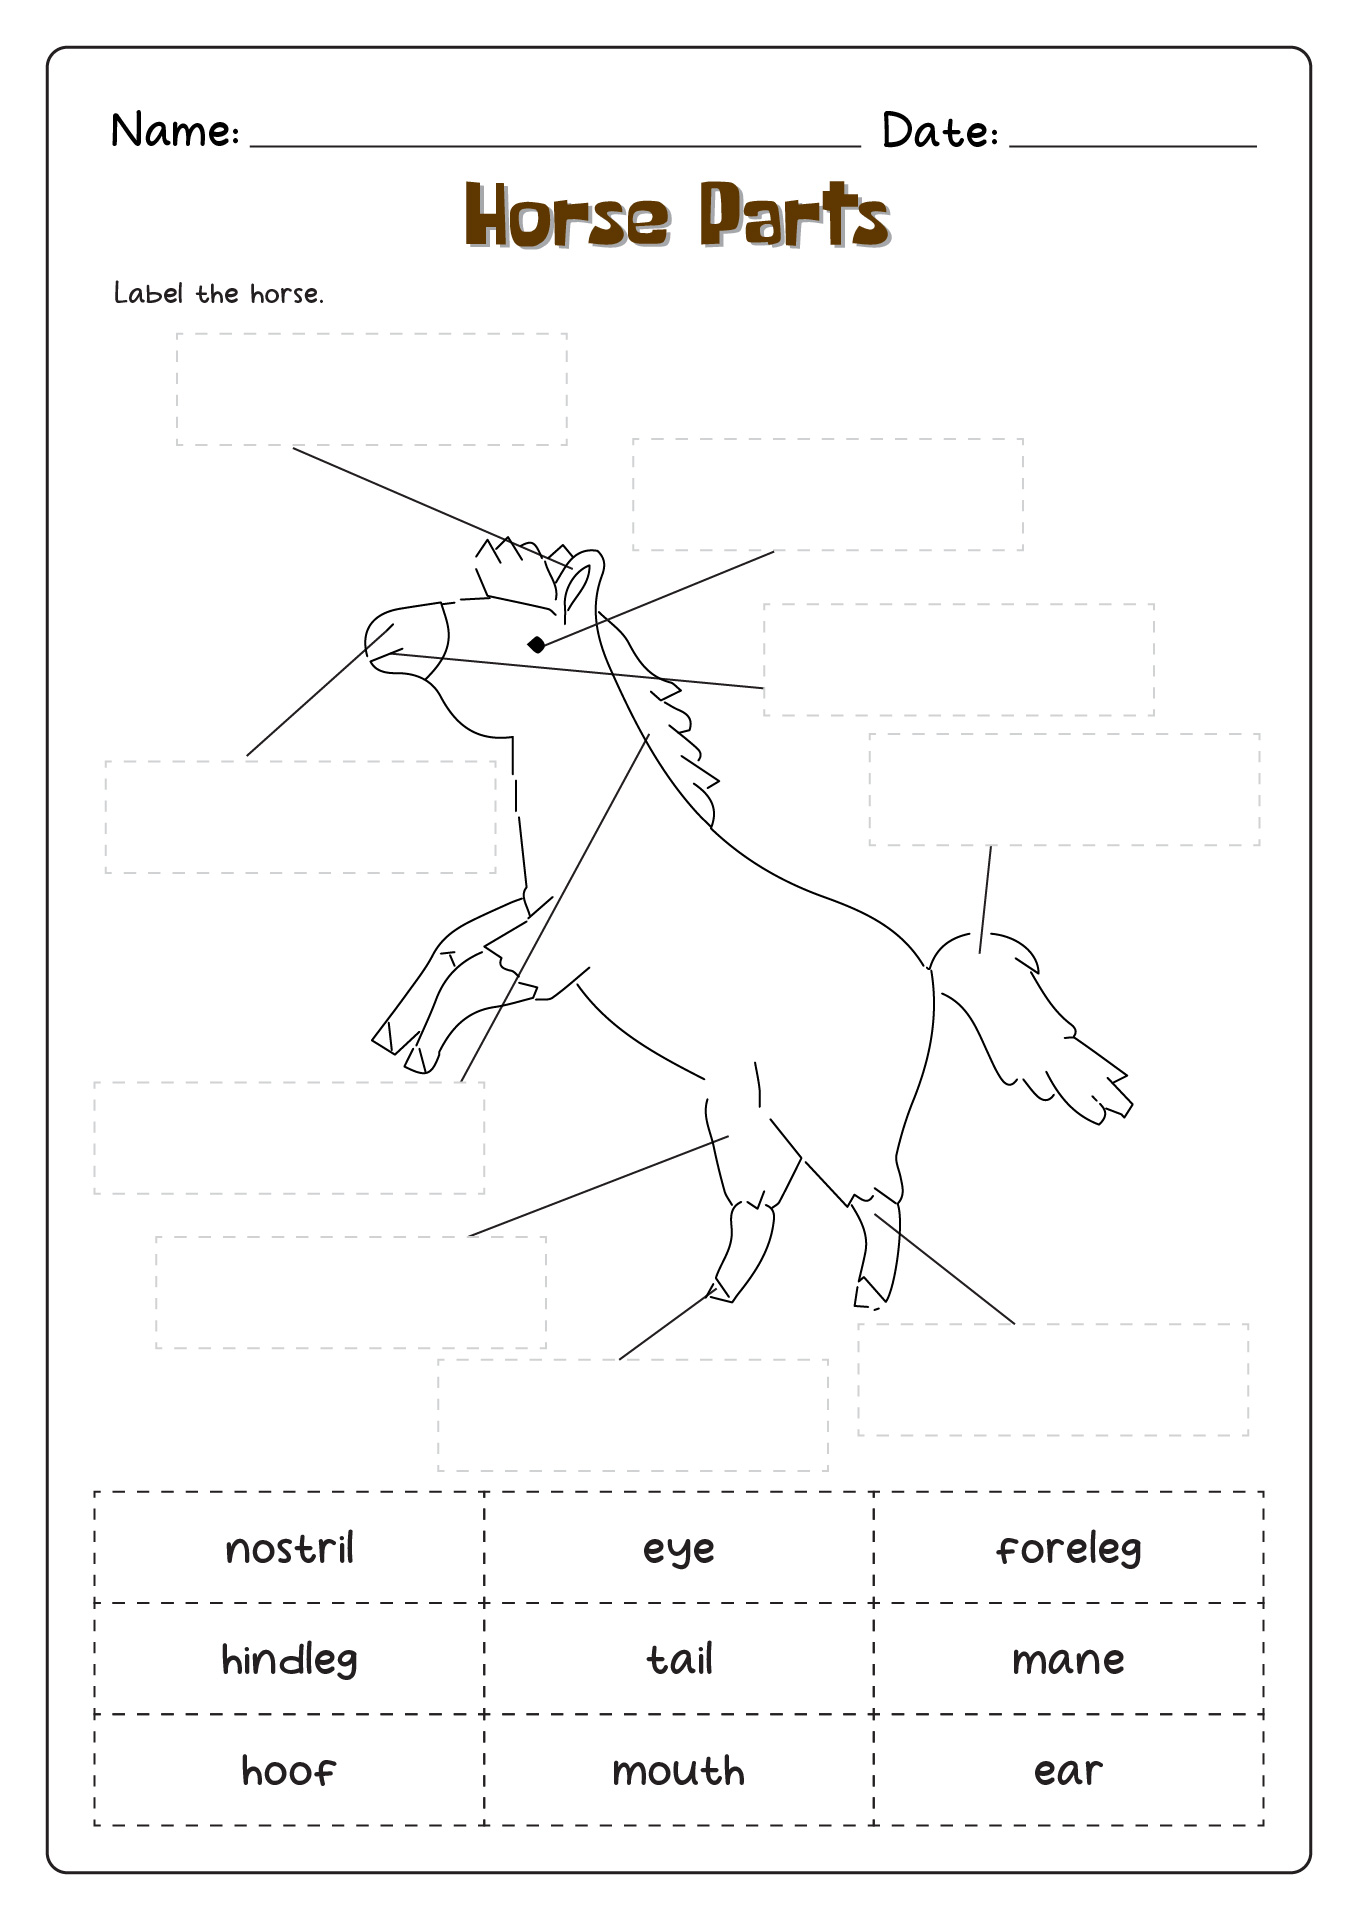 20 Best Images of Horse Tack Worksheet Printable - Horse Crossword ...